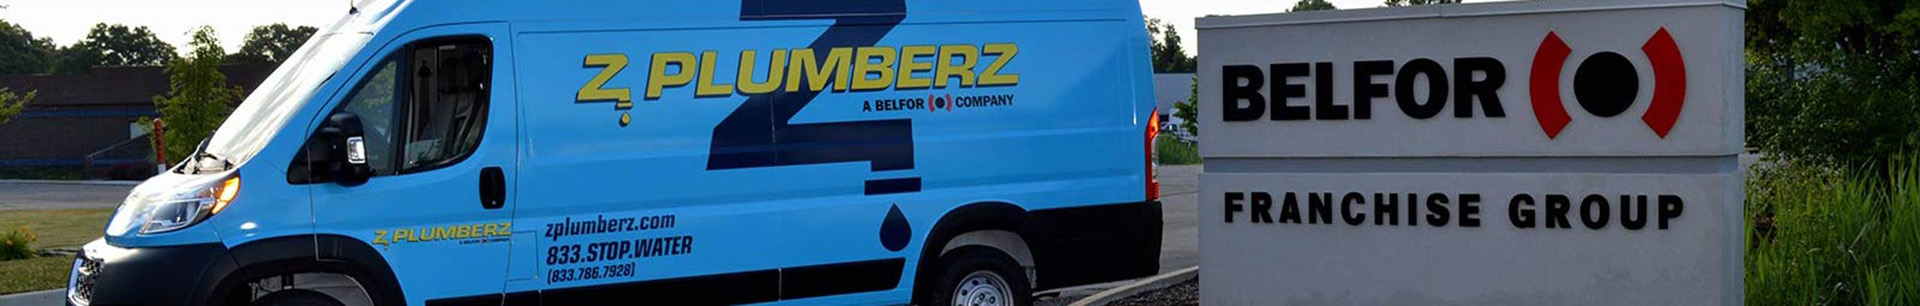 ZPlumberz Van next to Belfor Franchise Group Sign